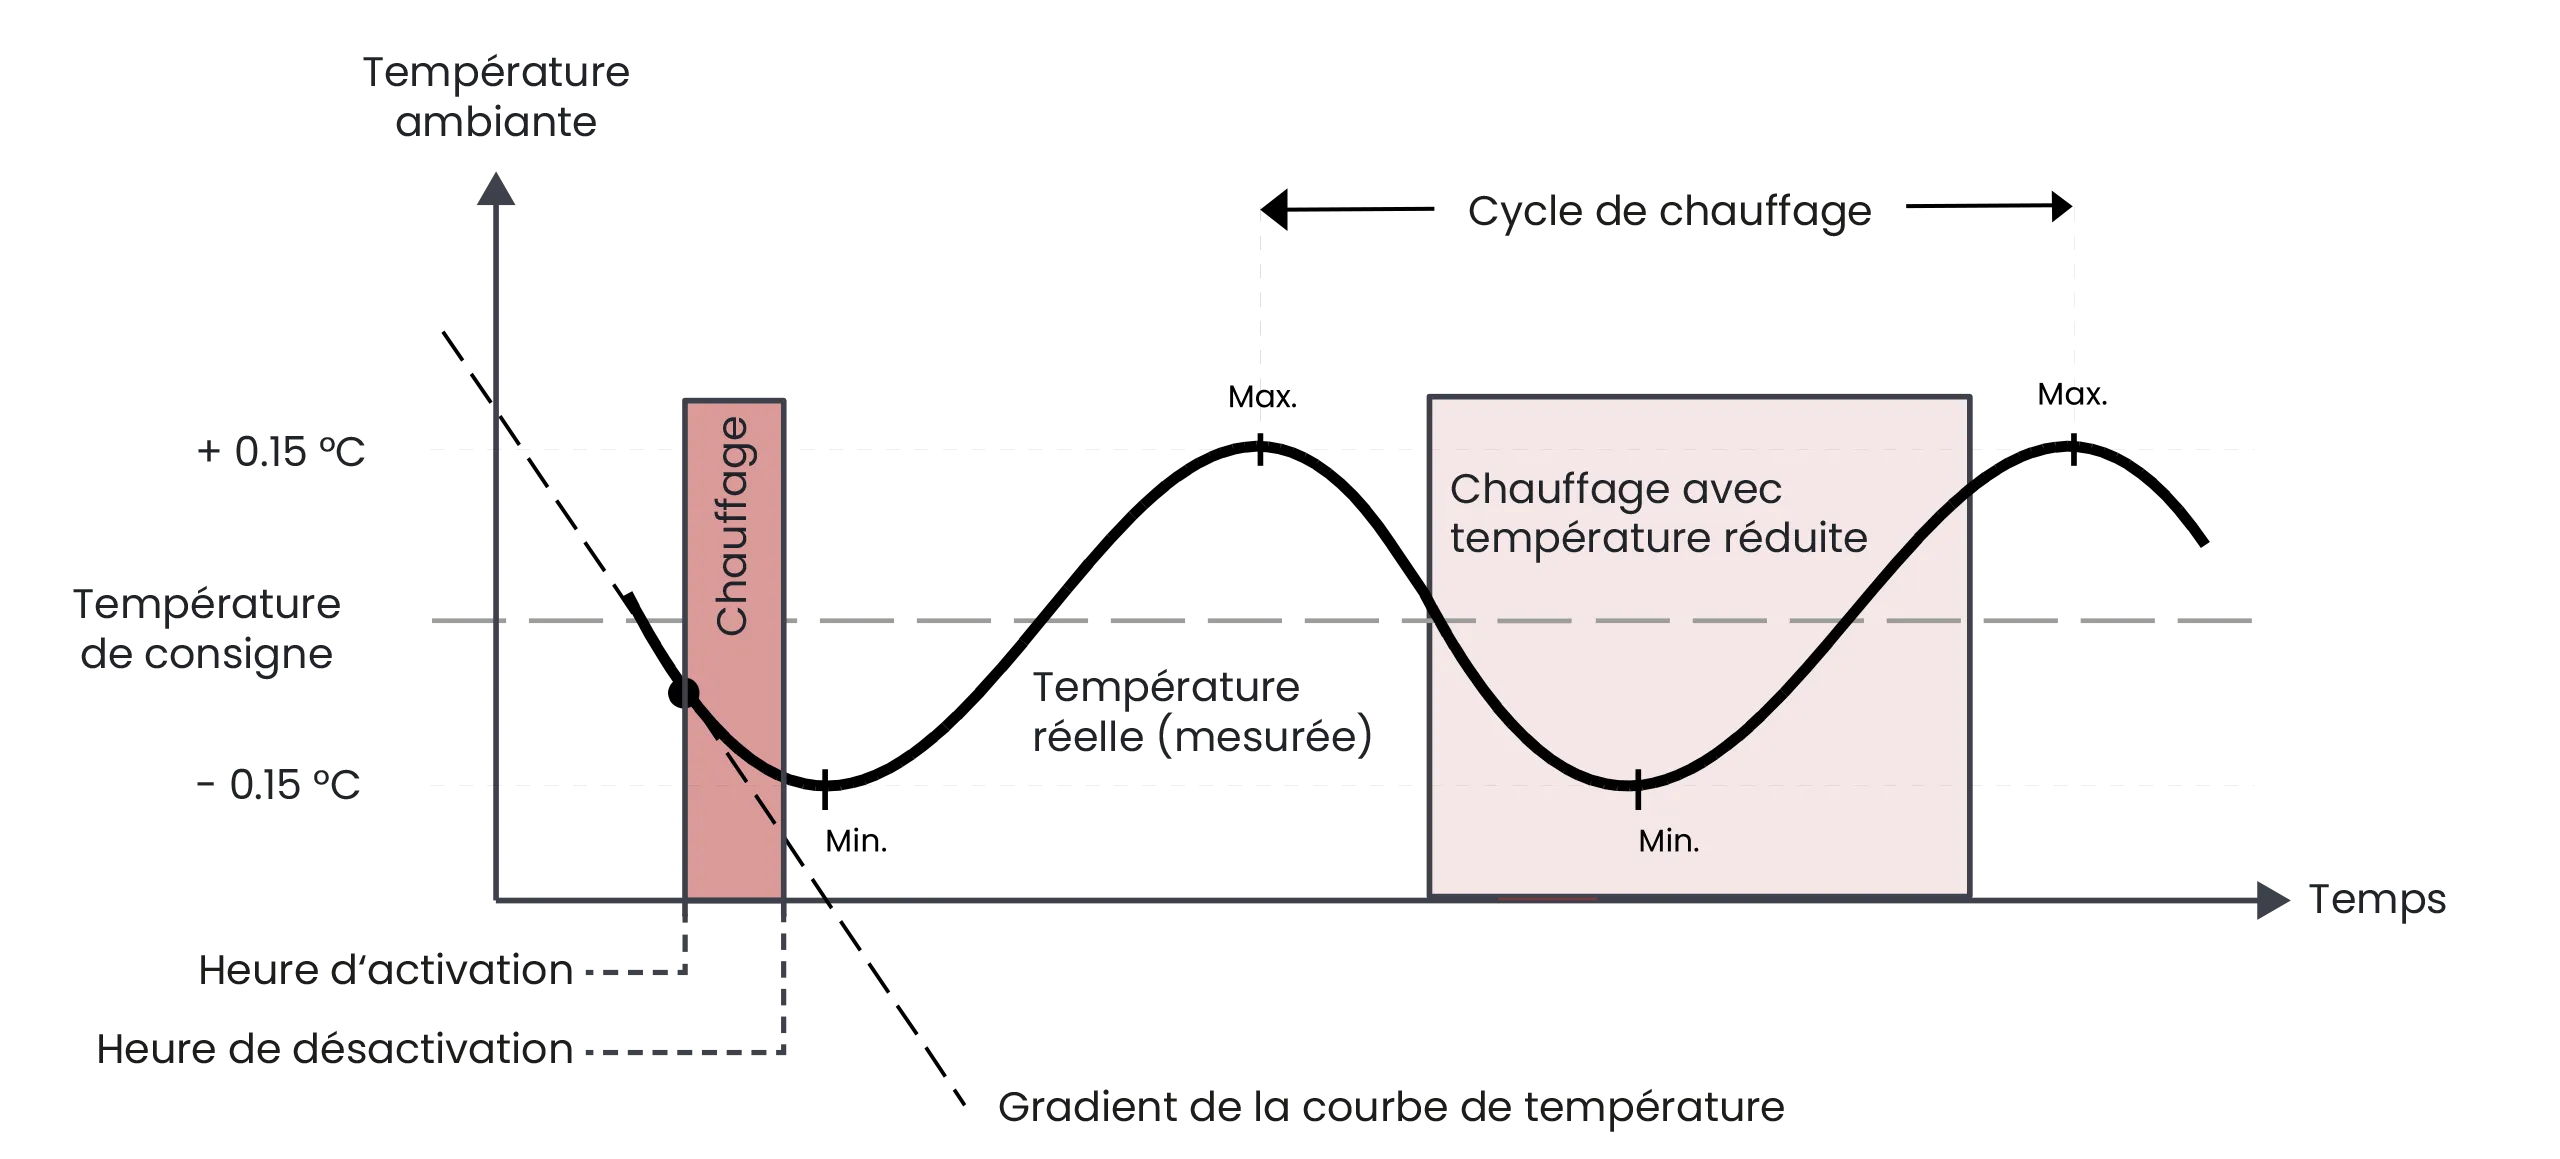 title="thz-vorlauftemperatur-chart-de"